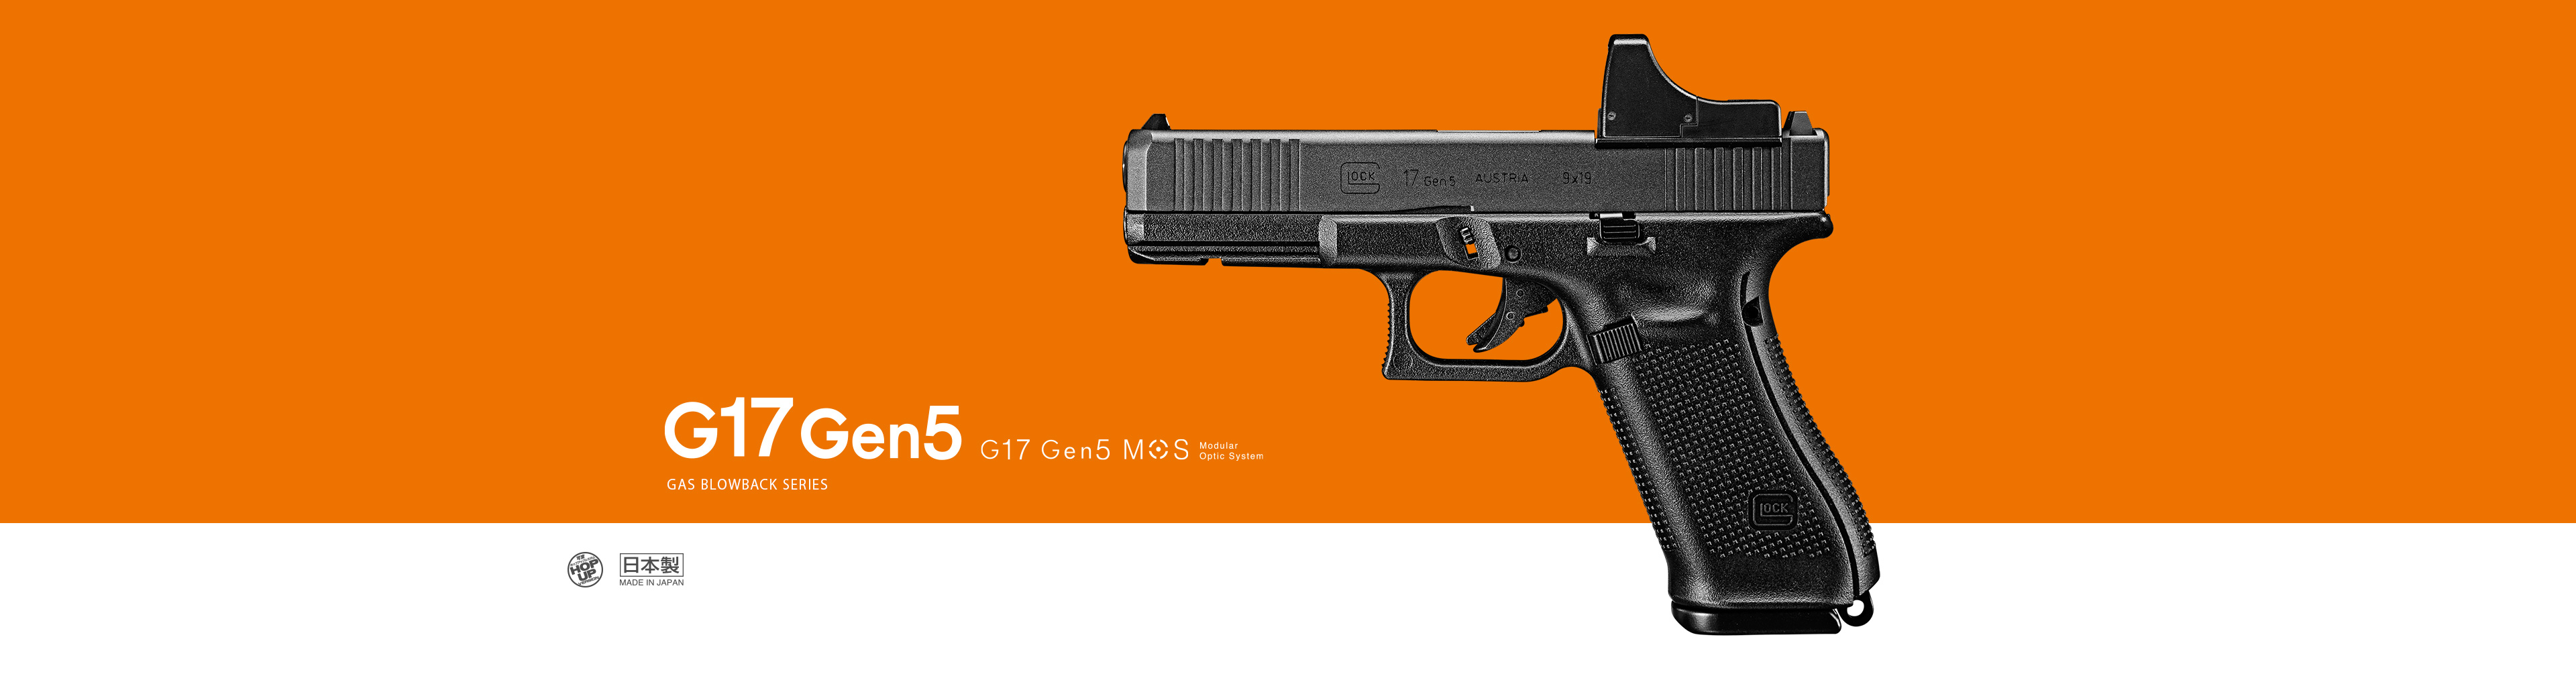 G17 Gen5 MOS